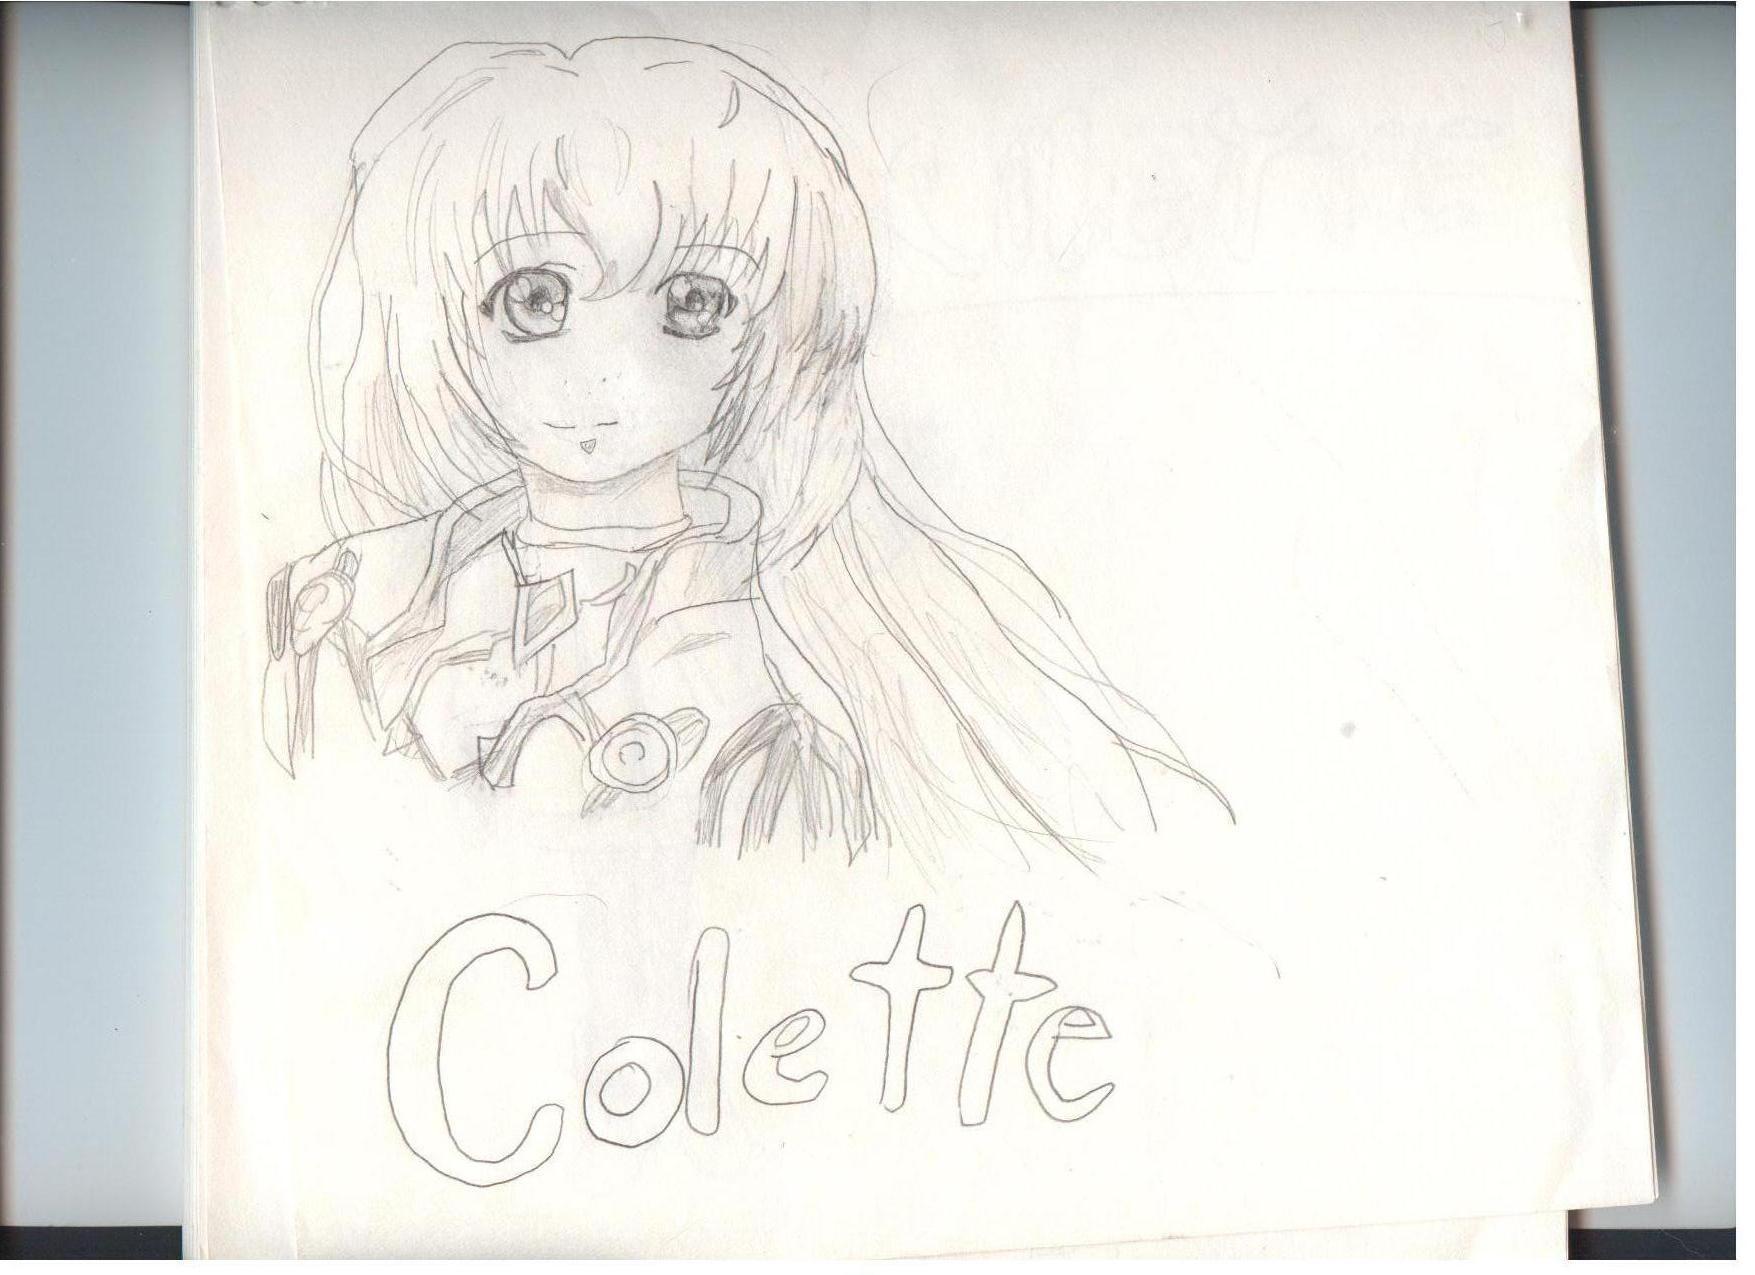 Colette by Kagome_fan478